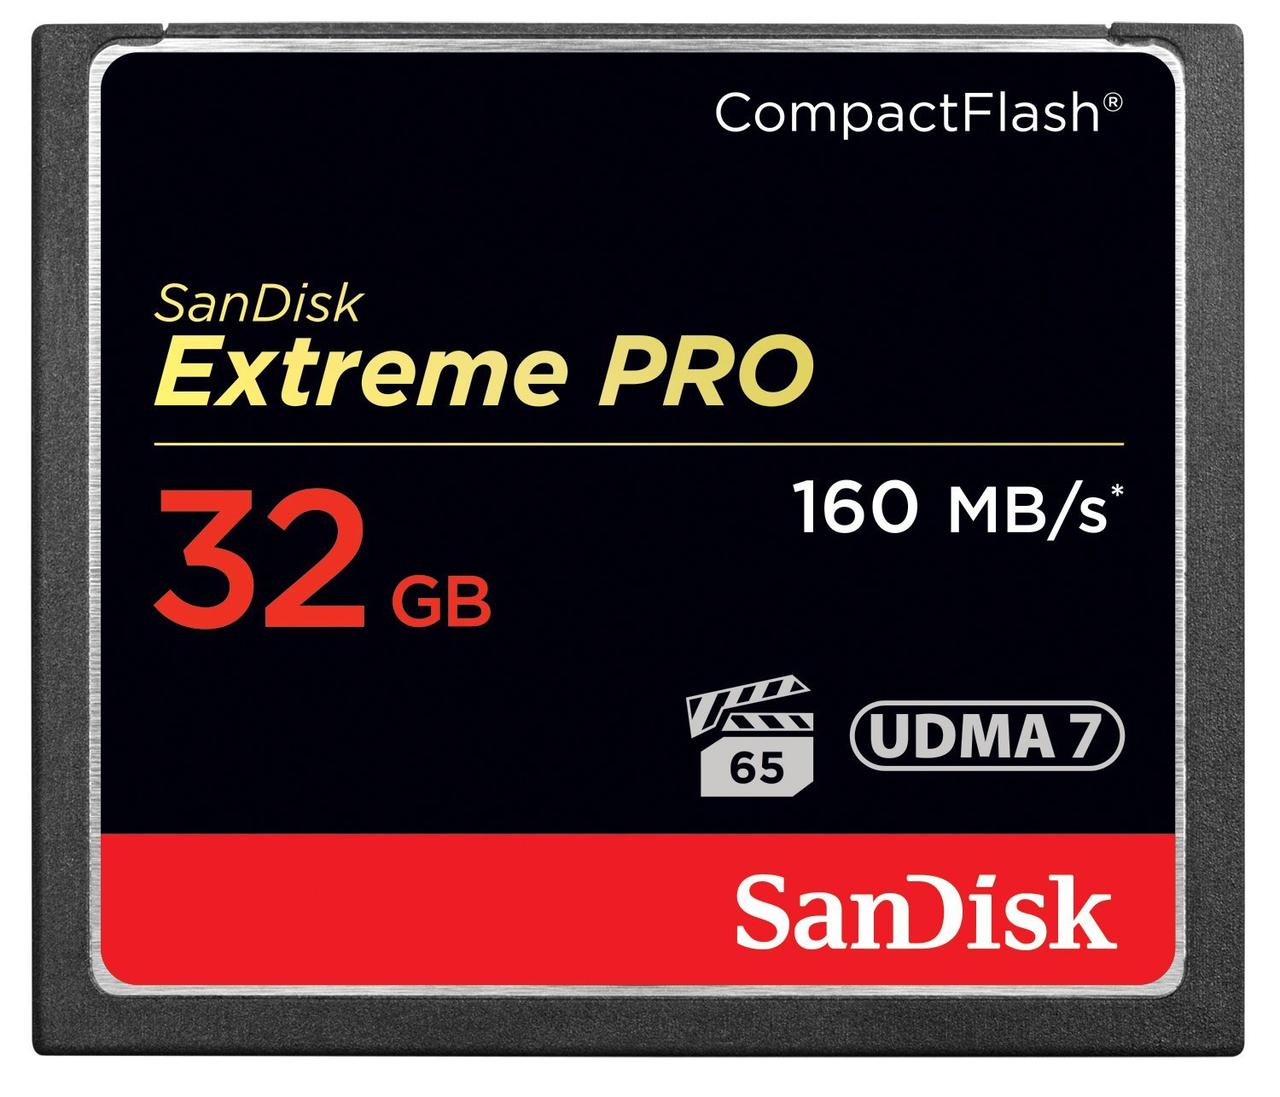 SanDisk Extreme PRO 32GB /ОРИГИНАЛ!/ CompactFlash карта памяти UDMA 7 скорость до 160MB